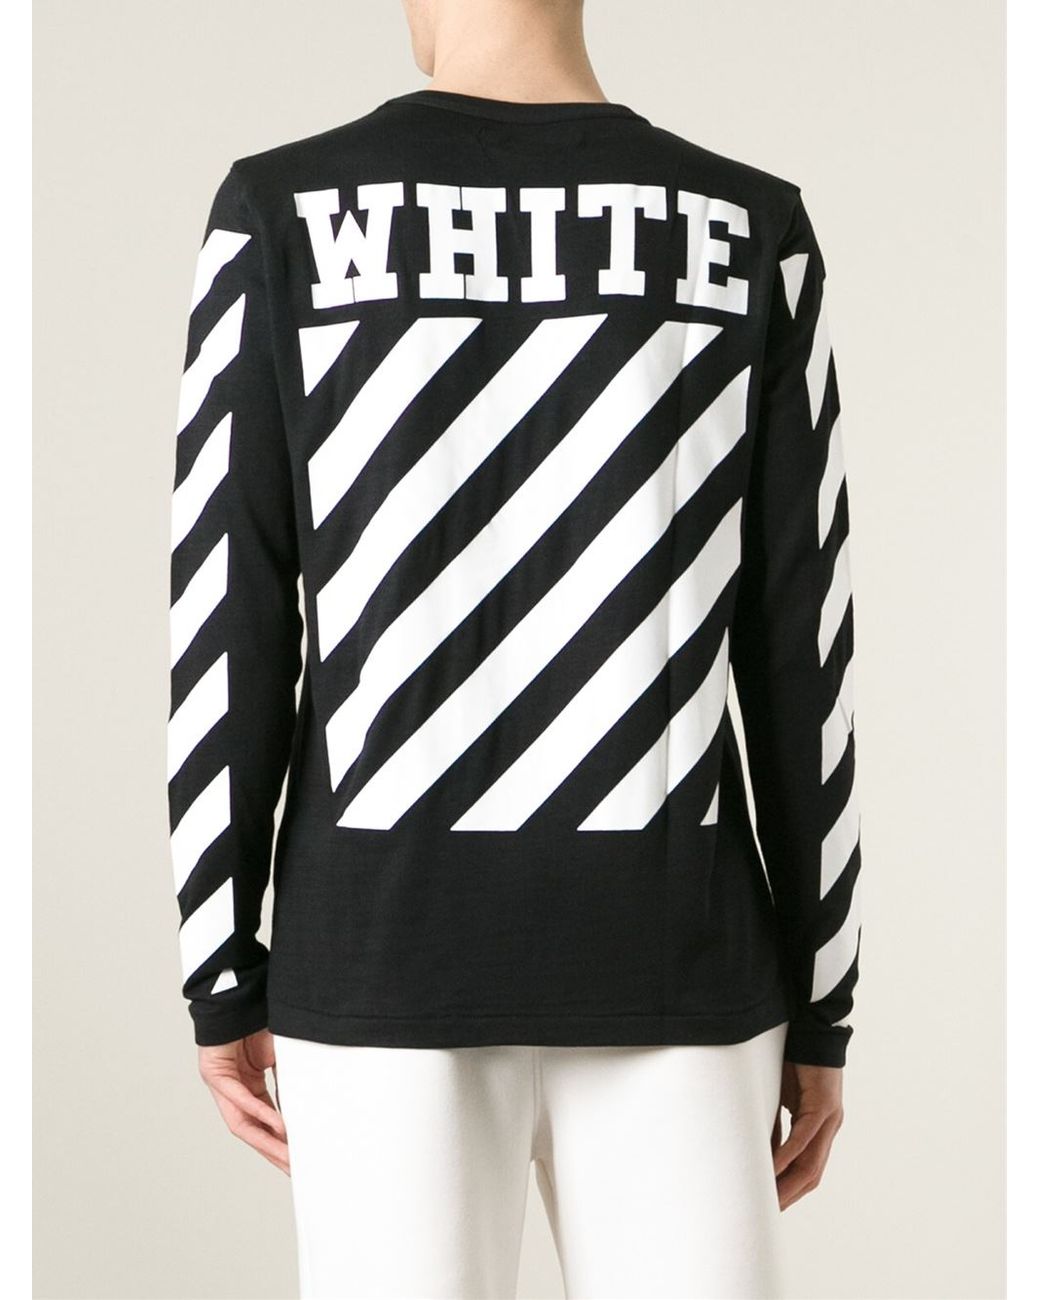 Off-White c/o Virgil Abloh Striped Sweater in Black for Men | Lyst